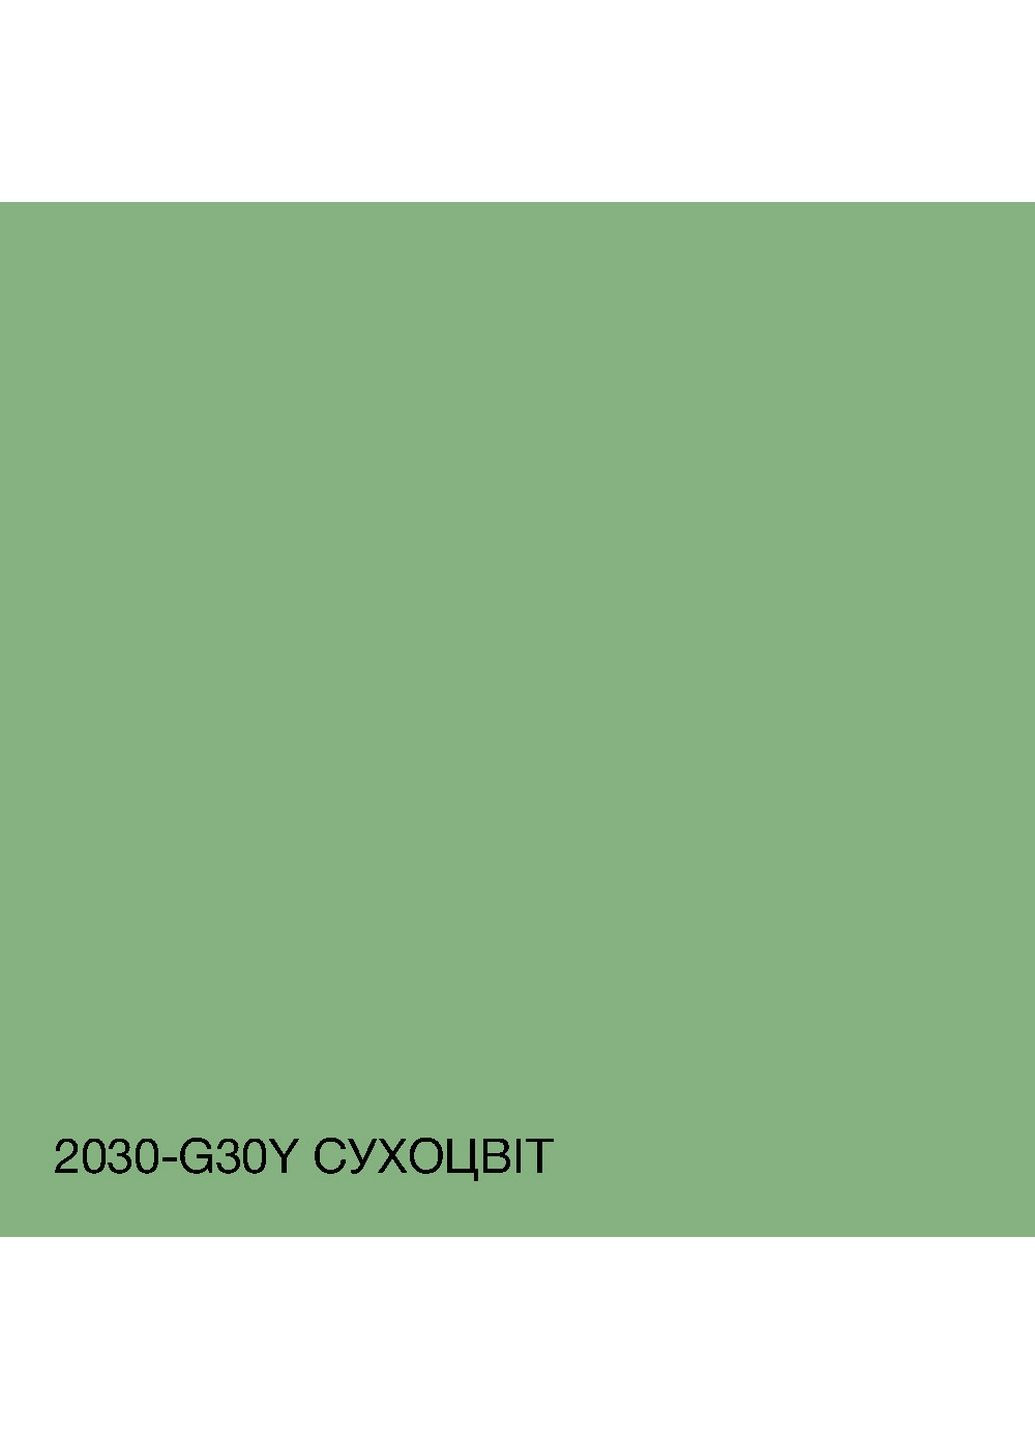 Фасадна фарба акрил-латексна 2030-G30Y 5 л SkyLine (289463375)